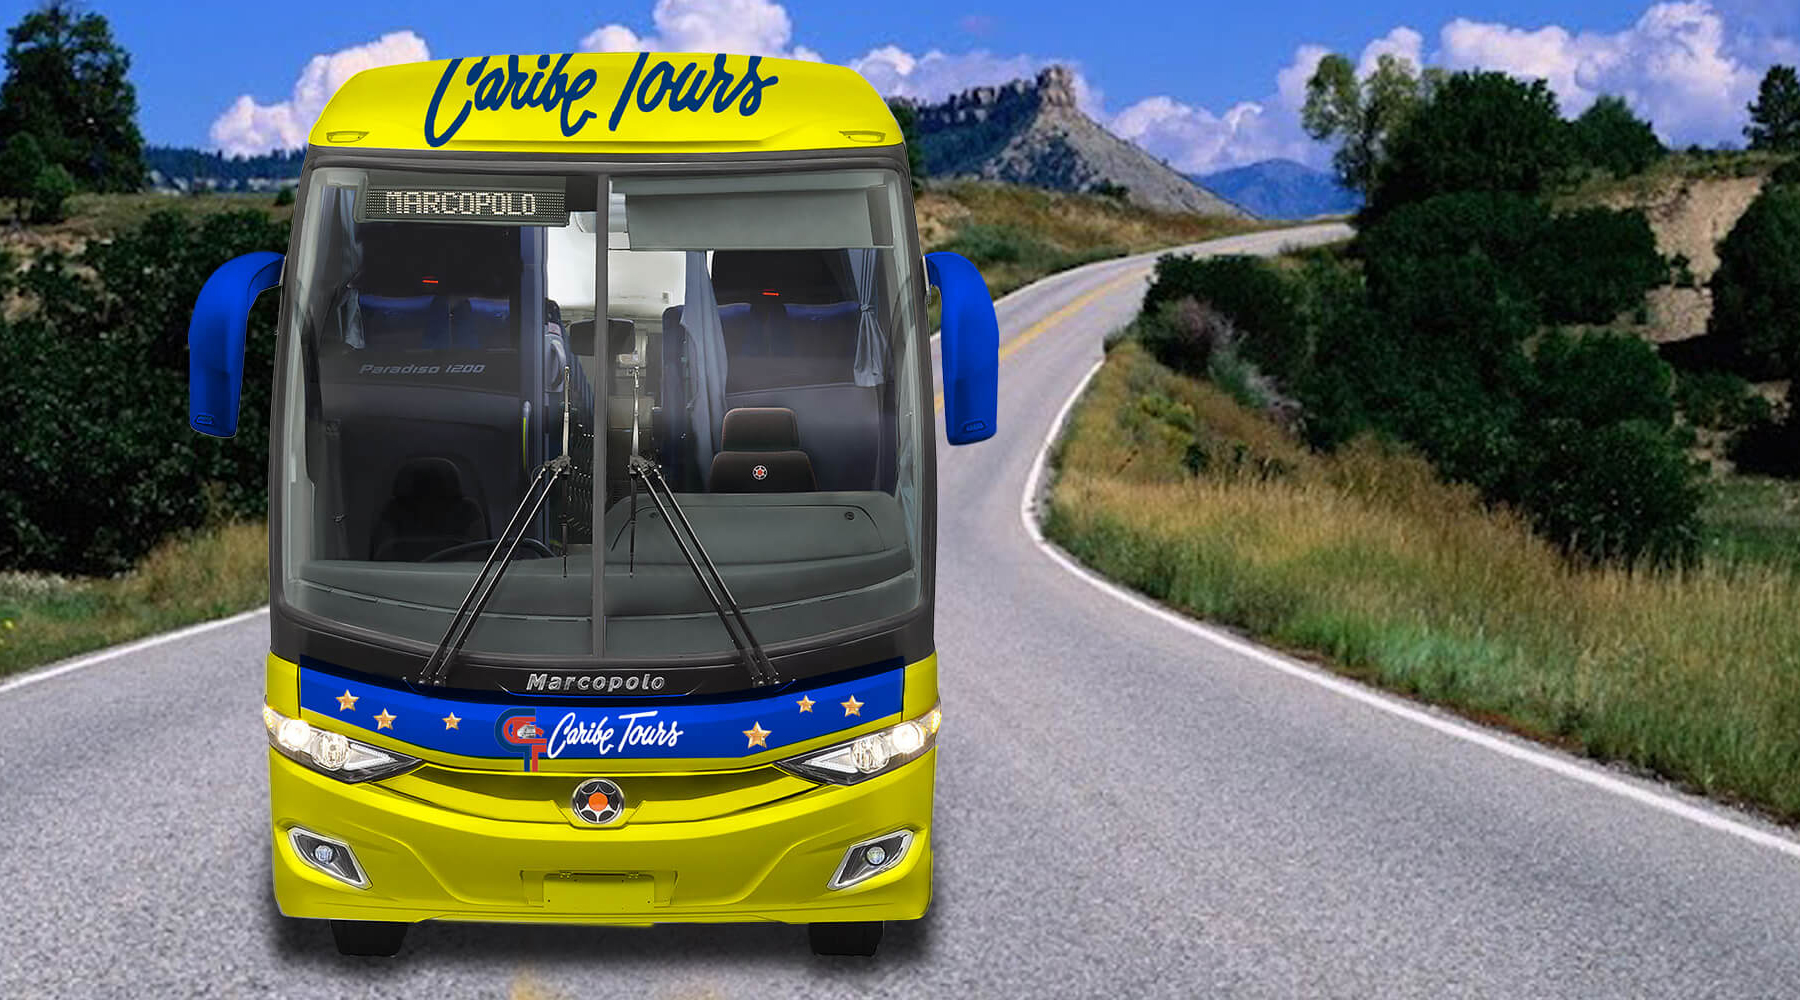 caribe tours bus schedule dominican republic